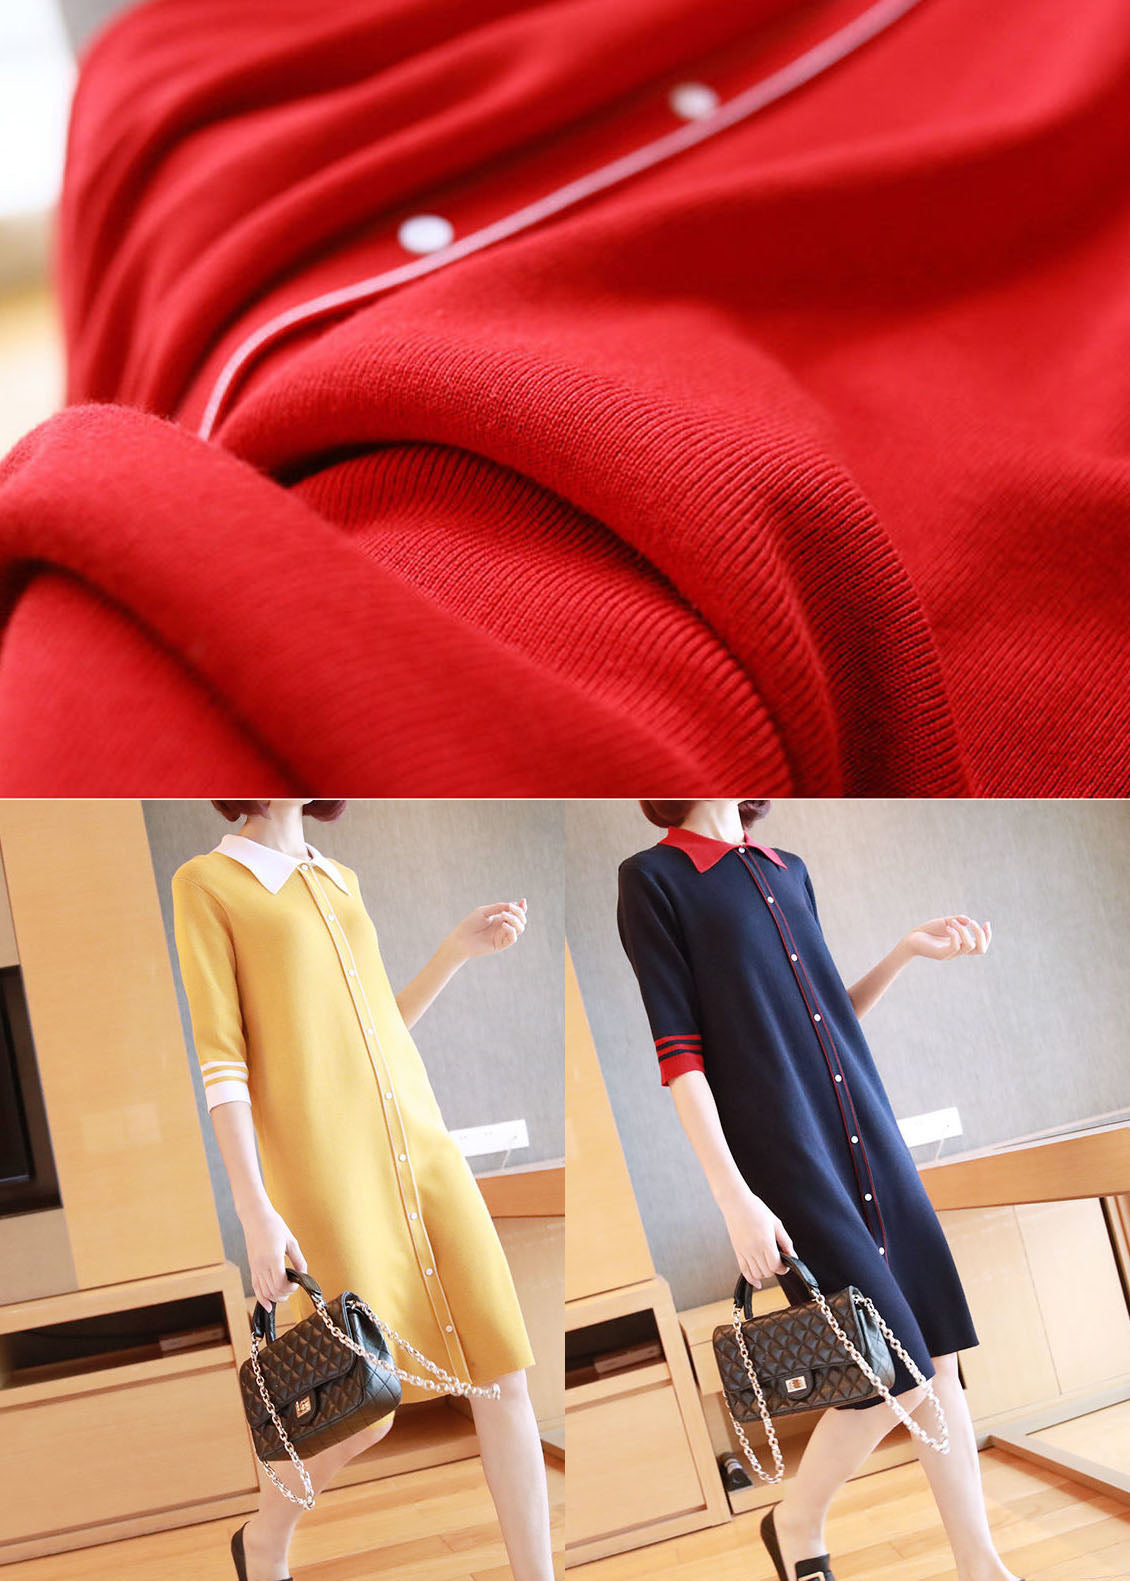 peopleterritory Yellow Slim Fit Knit Mid Dress Turn-down Collar Half Sleeve LY1444